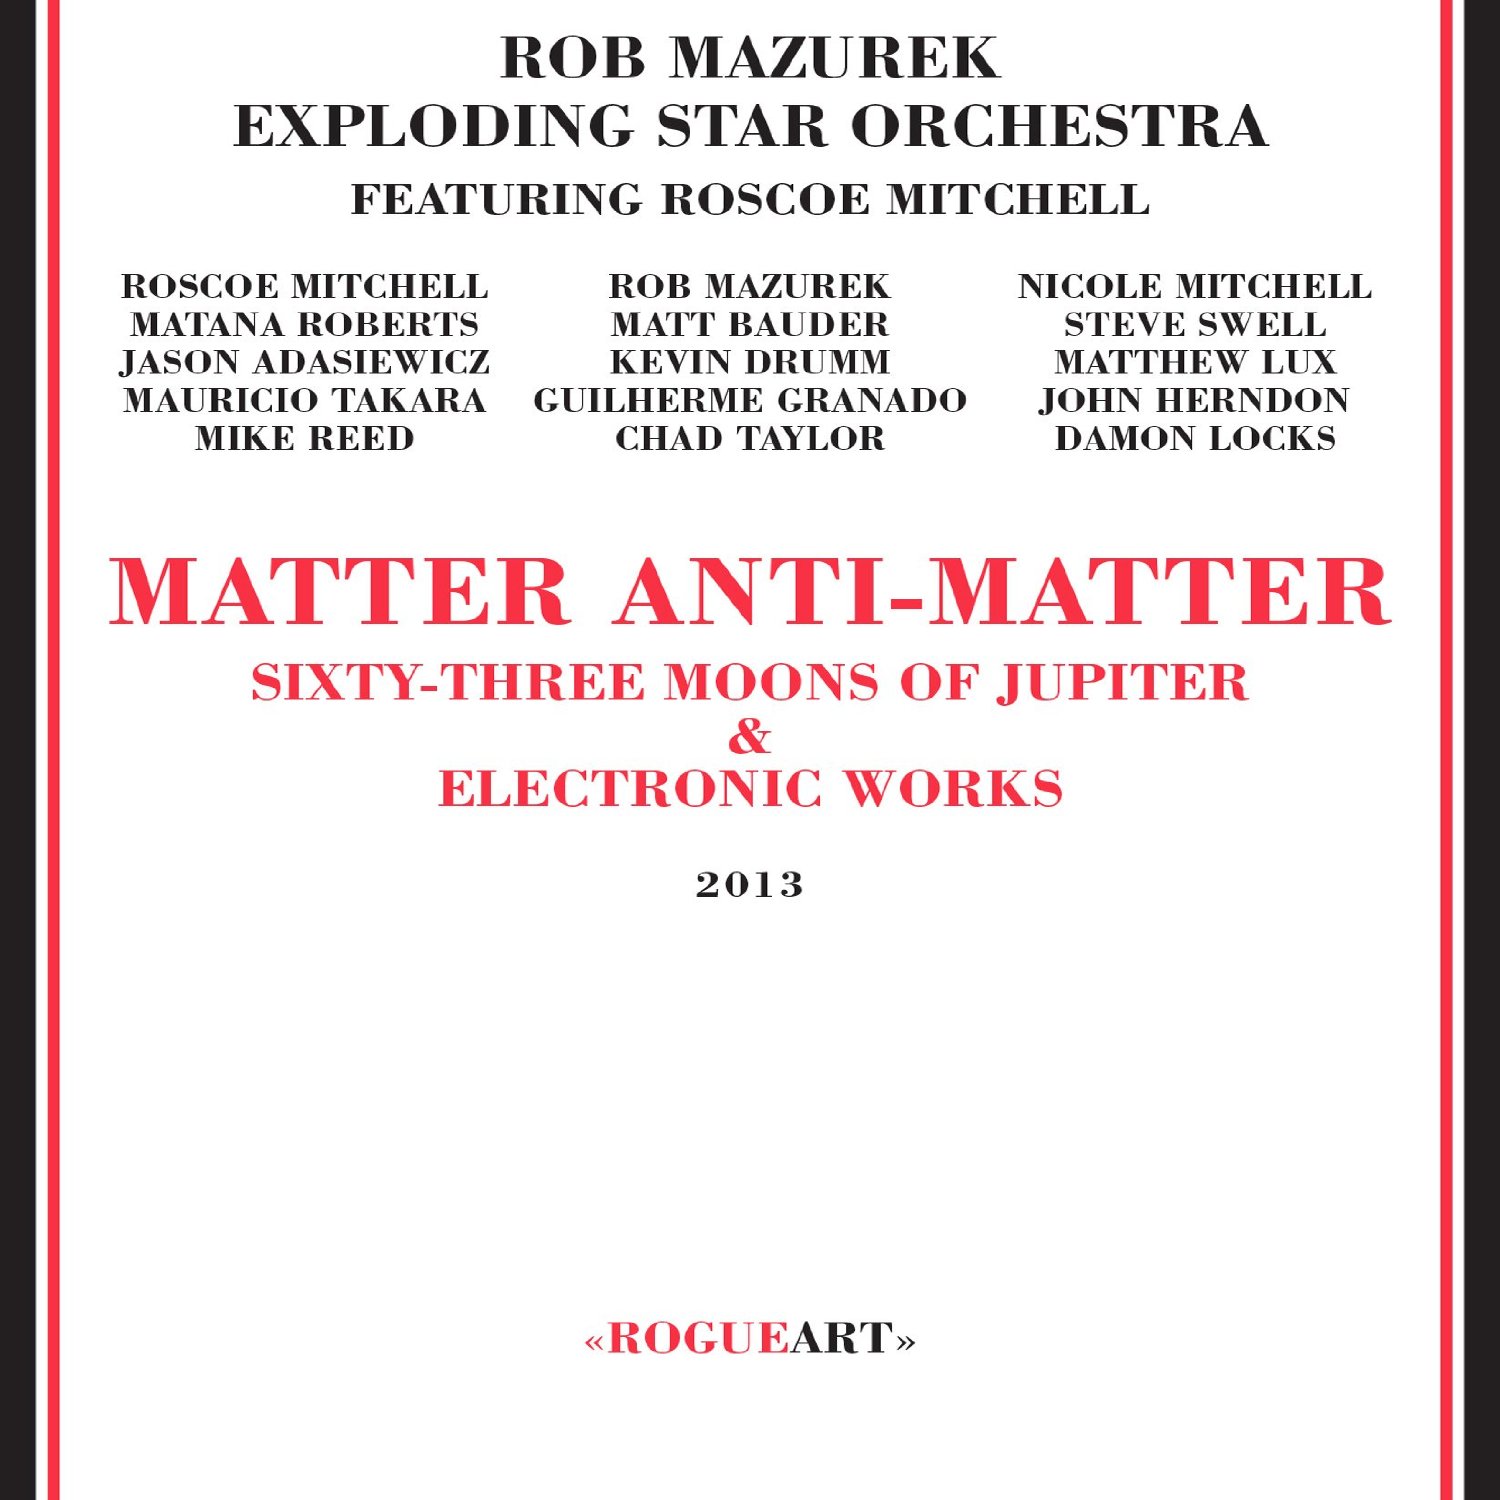 ROB MAZUREK - Rob Mazurek Exploding Star Orchestra Featuring Roscoe Mitchell : Matter Anti-matter cover 